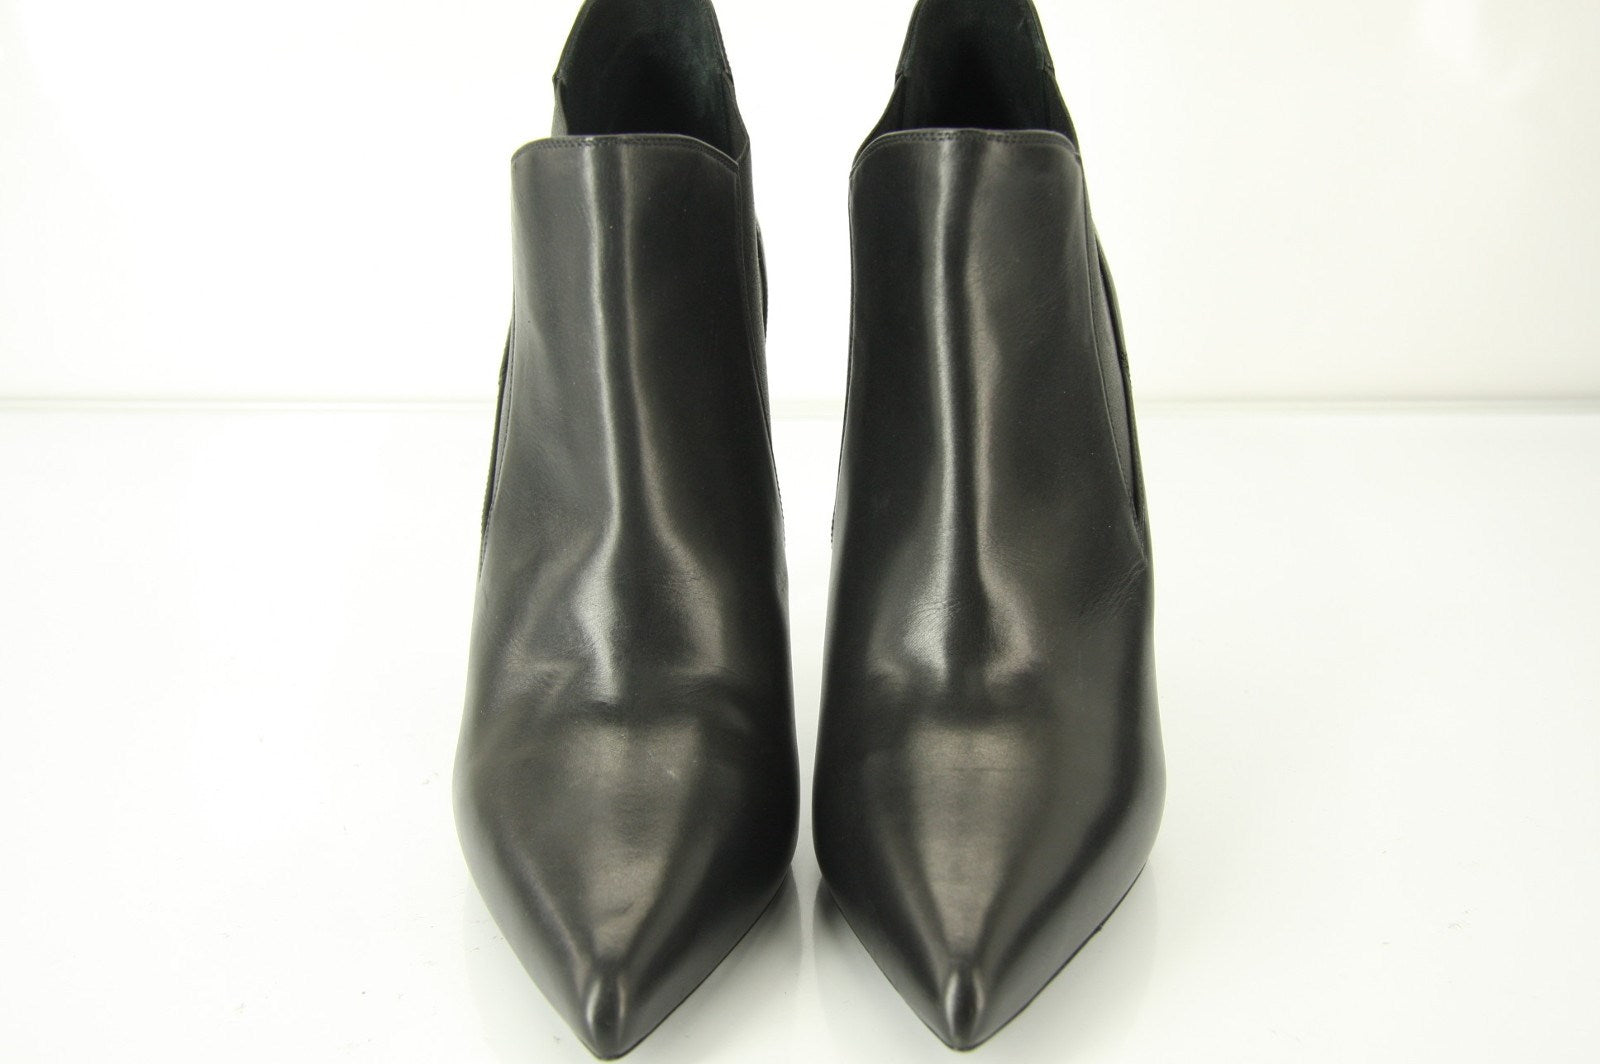 Saint Laurent Black Leather Paris Pointed Toe Ankle Boots Size 39.5 NIB YSL Yves